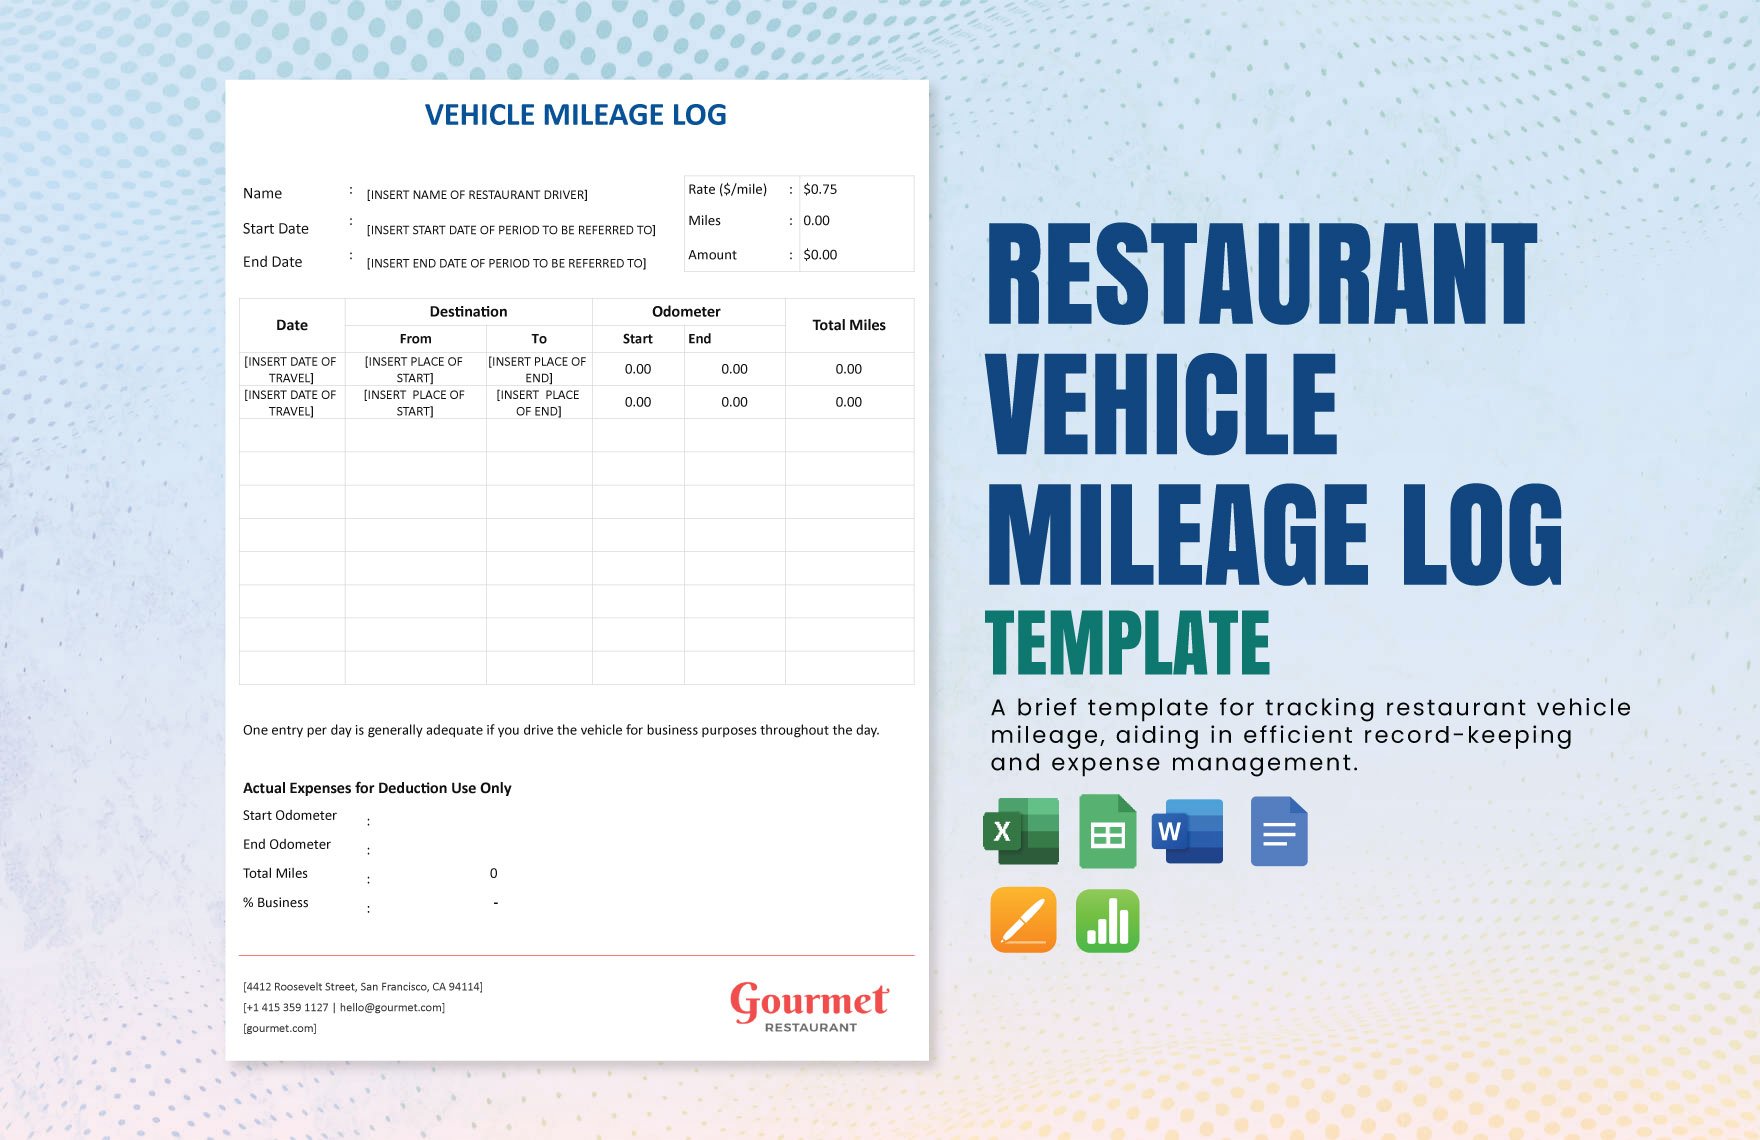 Restaurant Vehicle Mileage Log Template